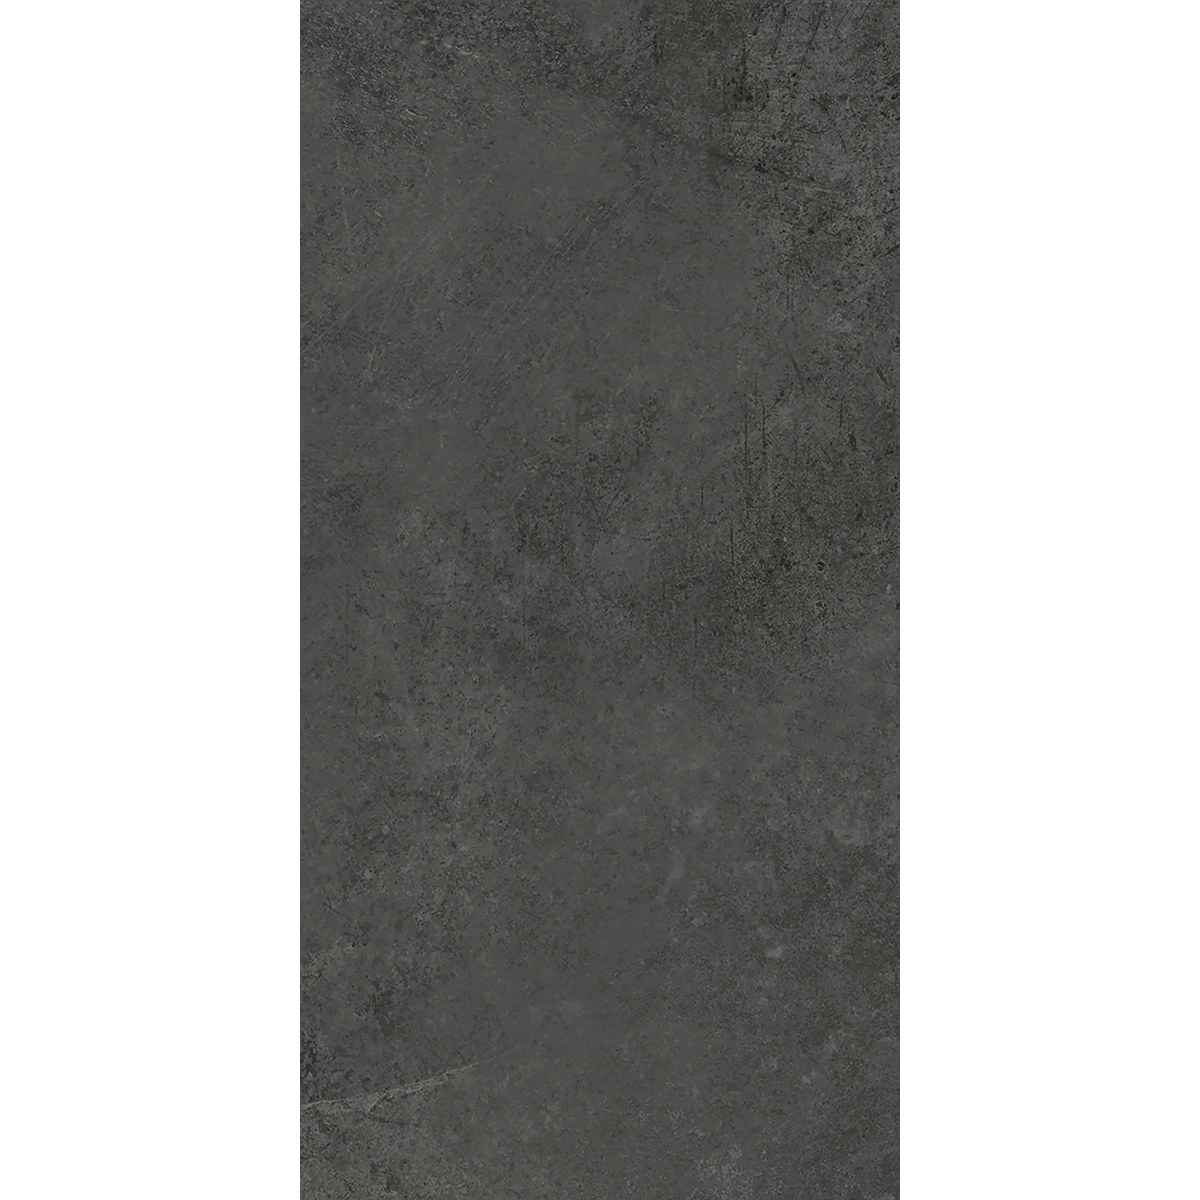 Terrassenplatten Kreta Antracite 45x90x2 cm